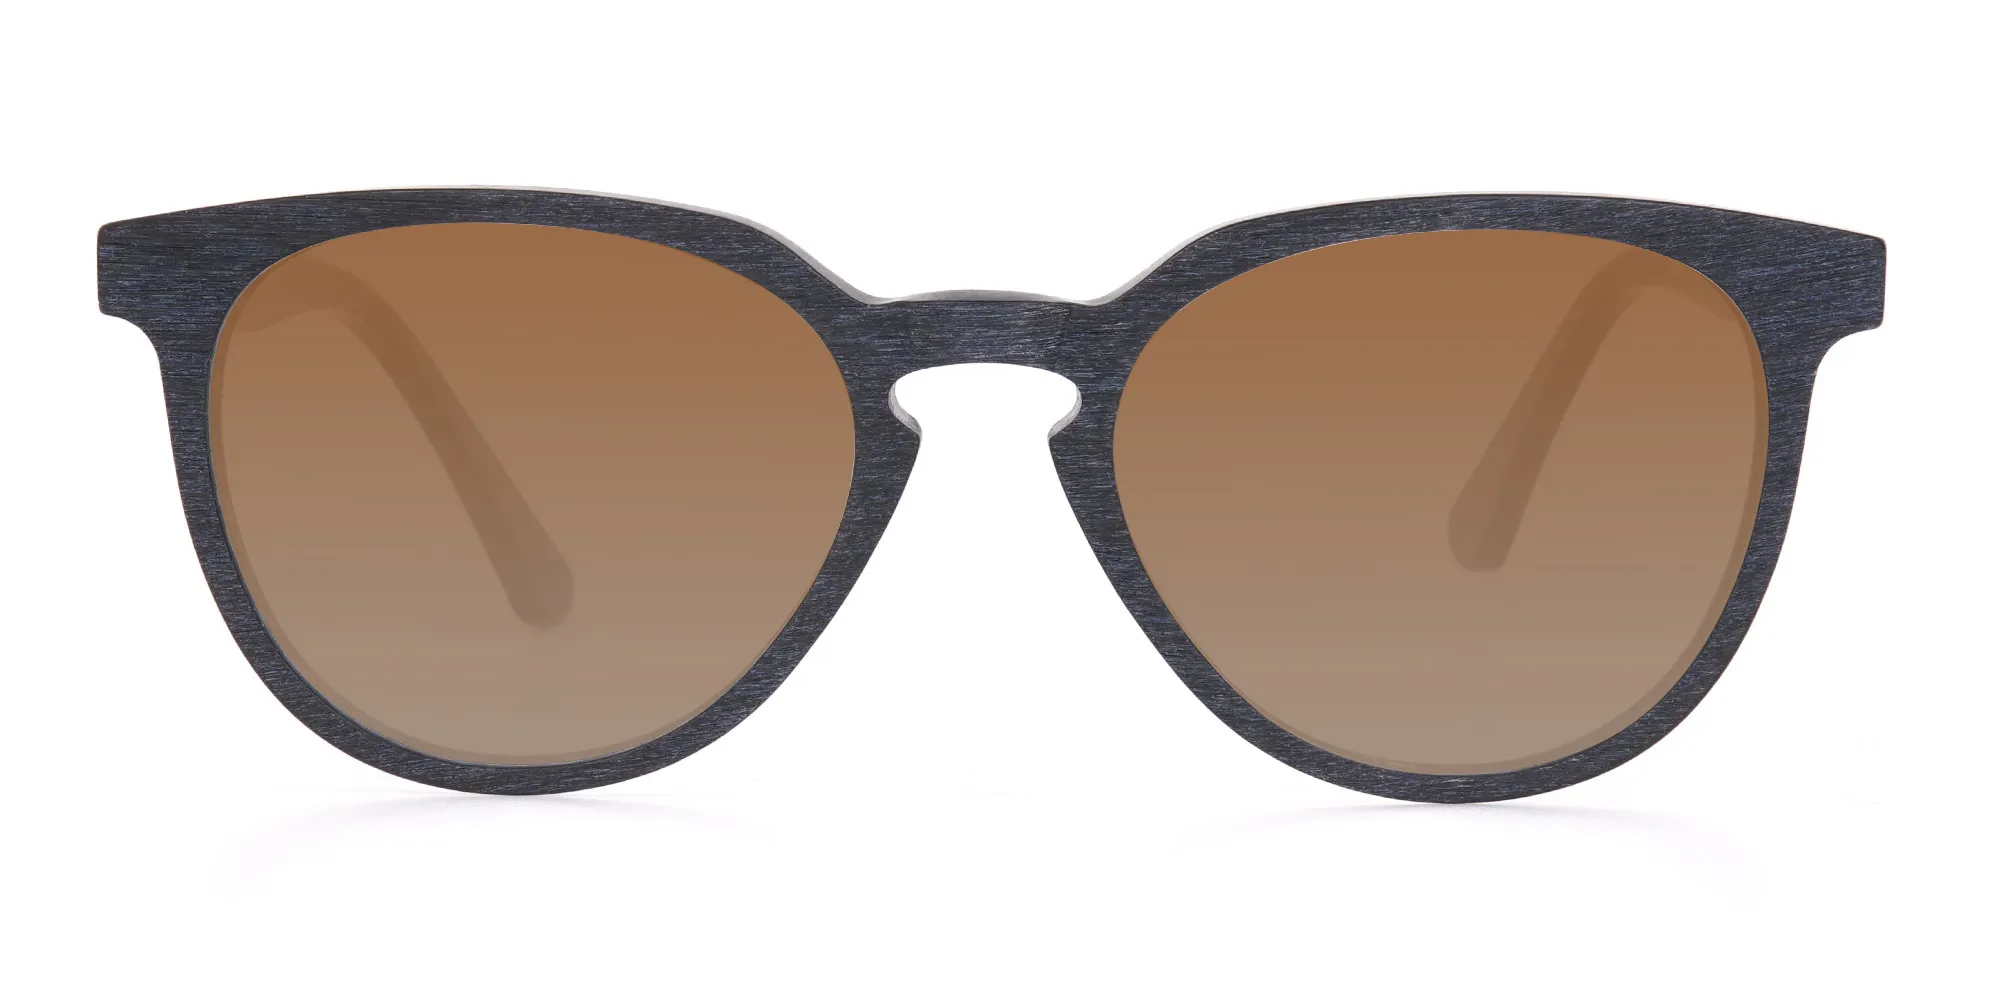 Black Wood Sunglasses with Dark Brown Tint  - 2